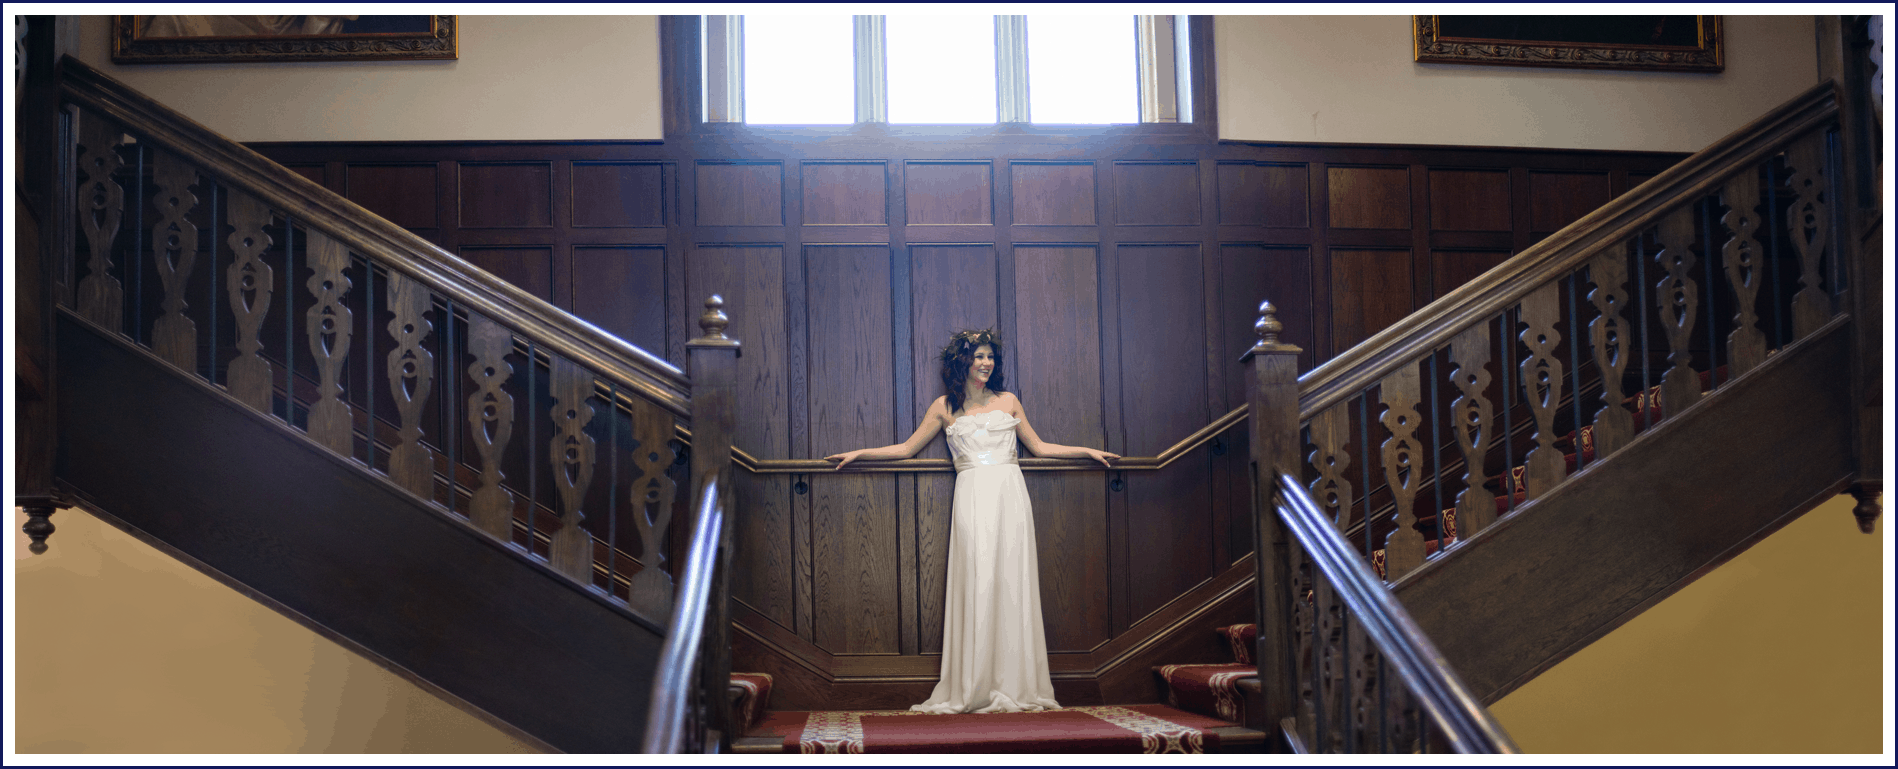 Bride stood on stairs